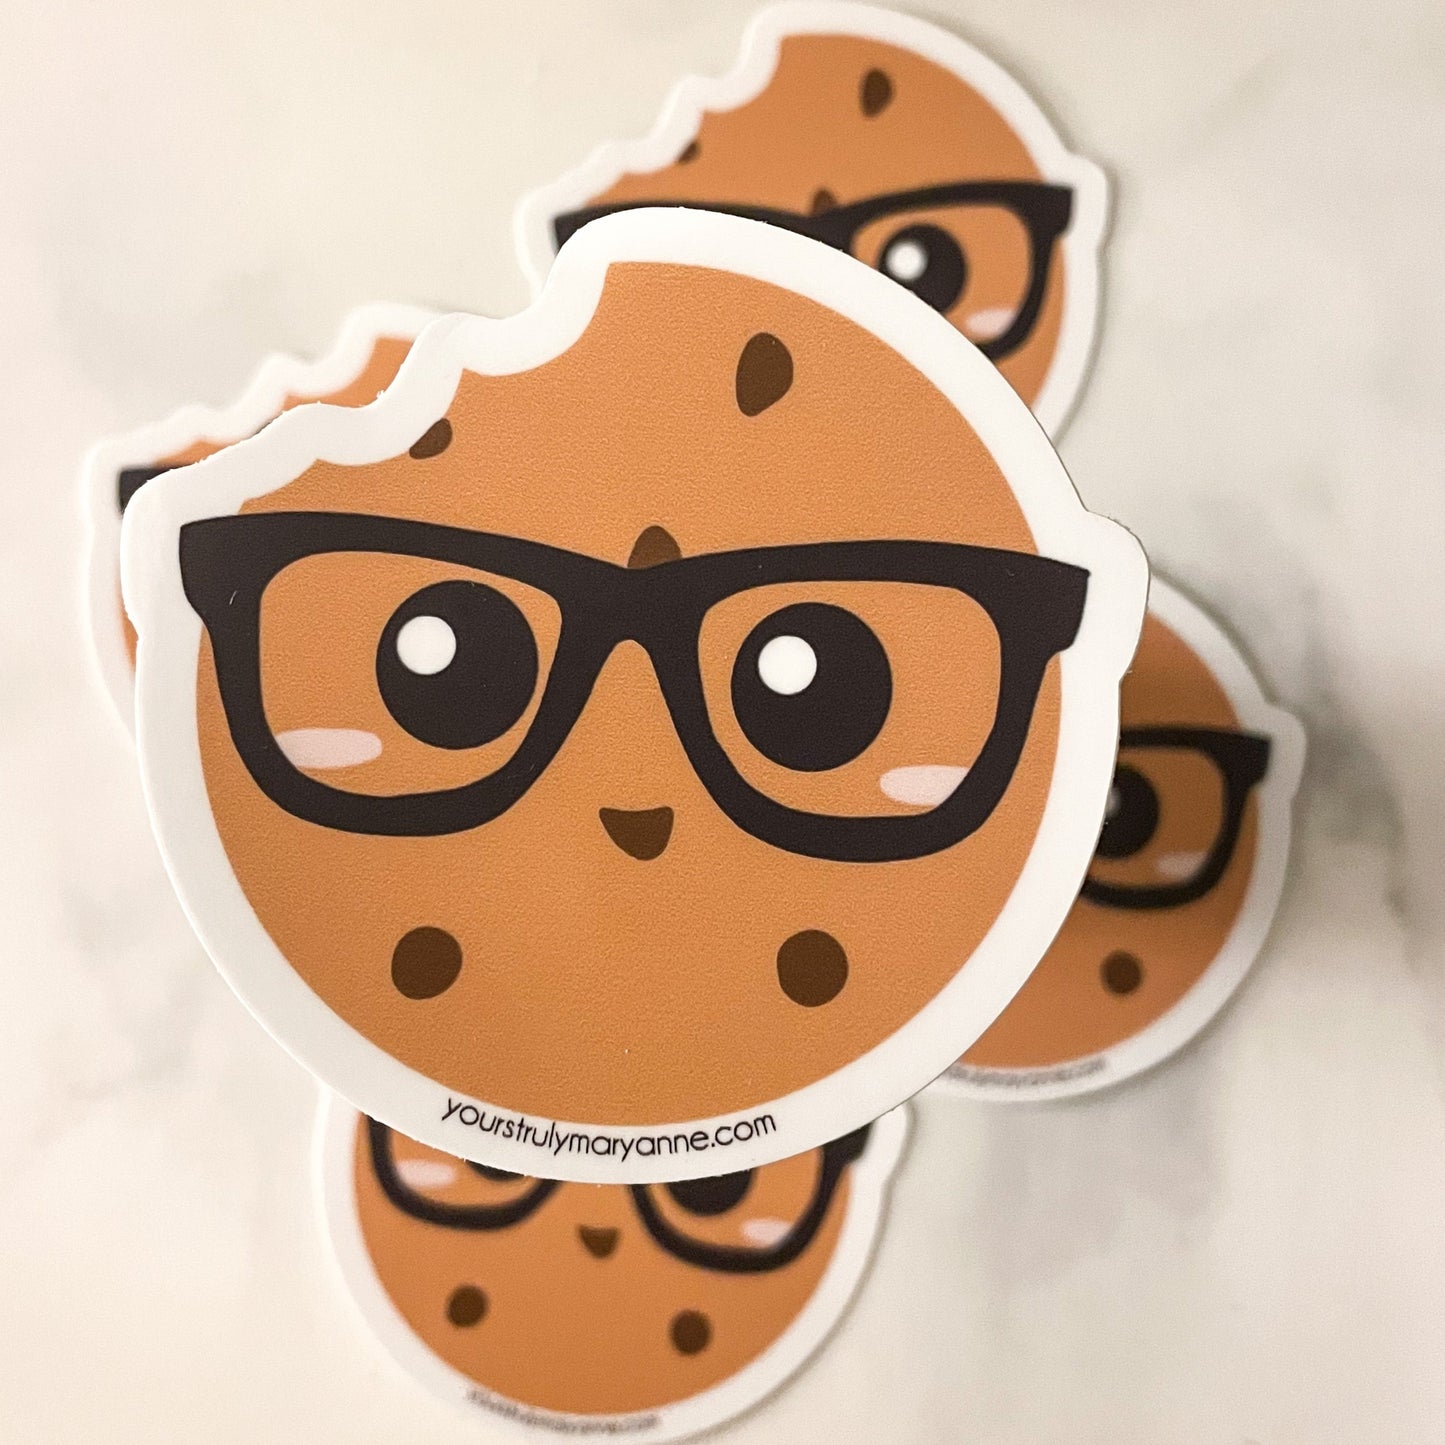 Tough, Smart Cookie Sticker